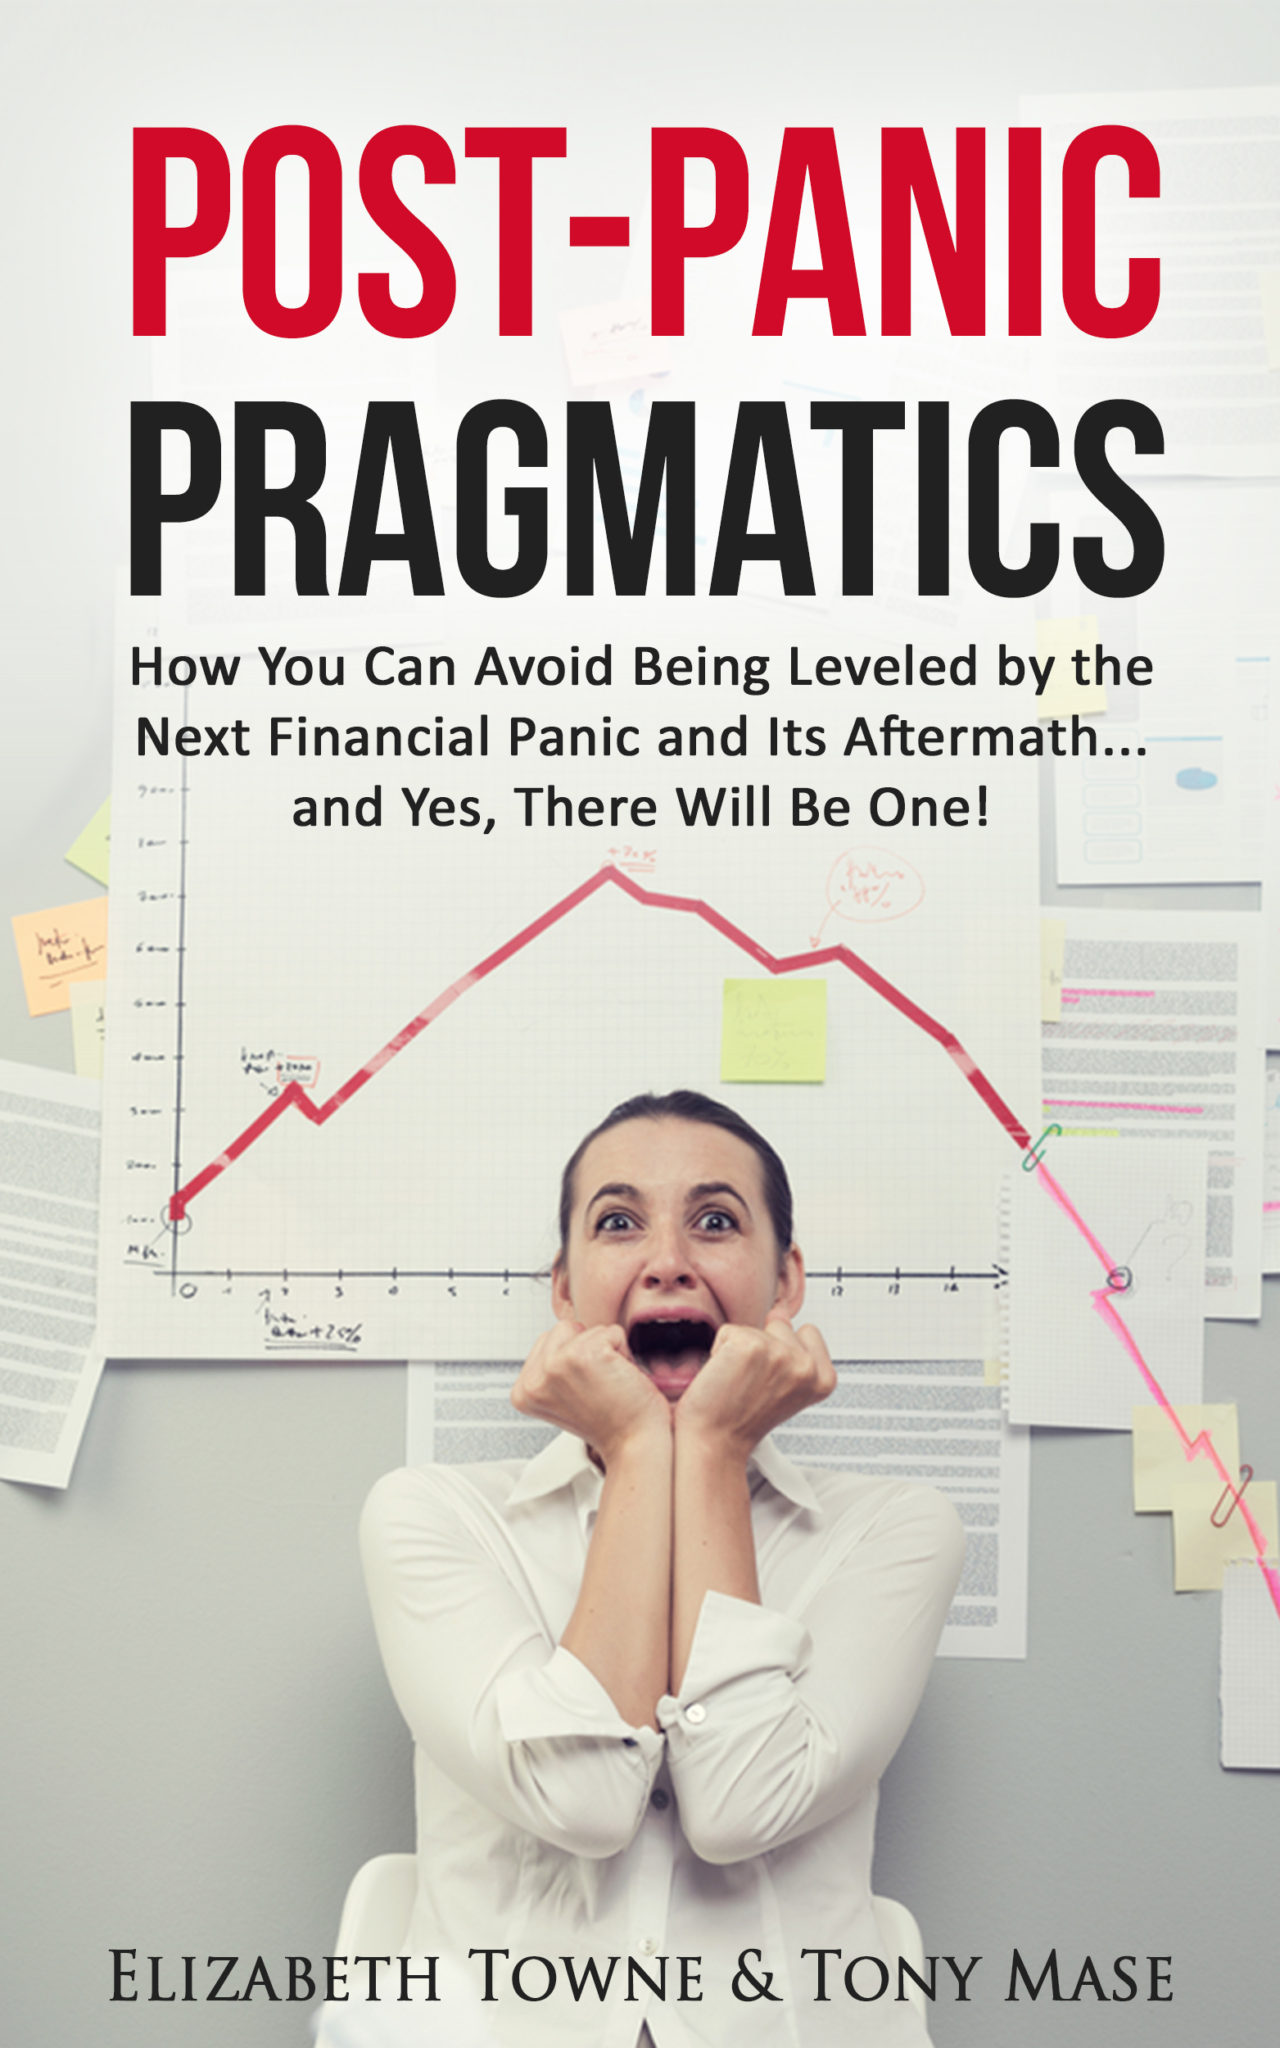 FREE: Post-Panic Pragmatics (Article) by Elizabeth Towne